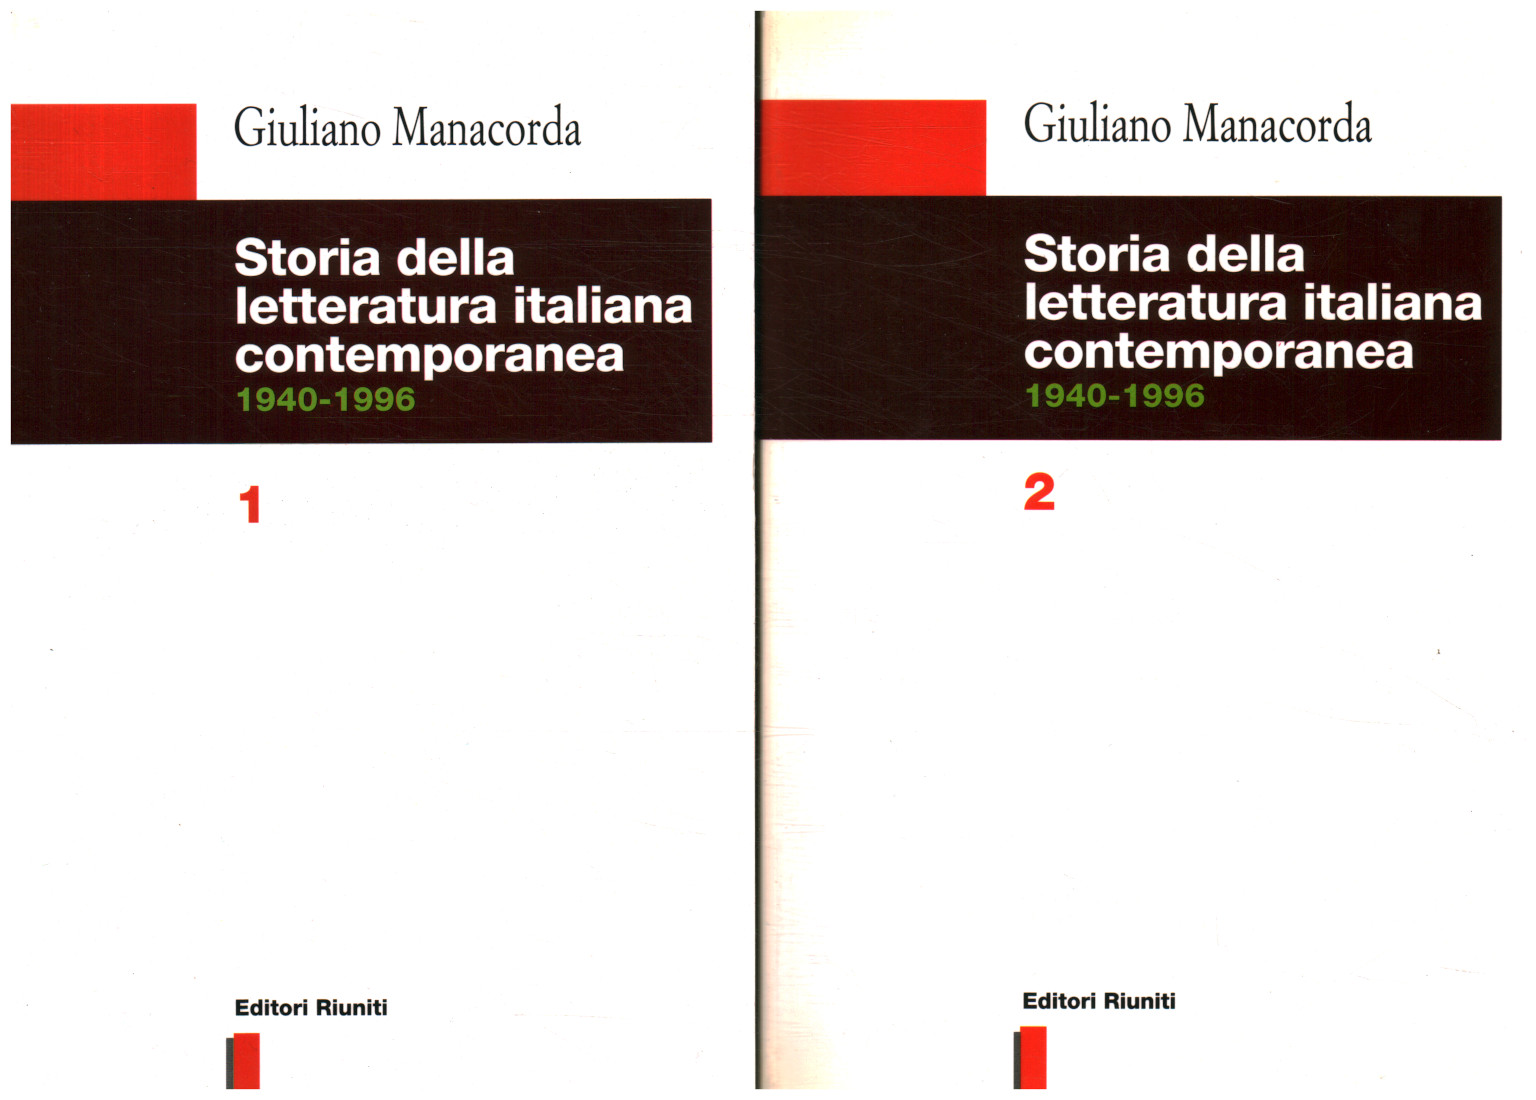 Historia de la Literatura Italiana Contemporánea